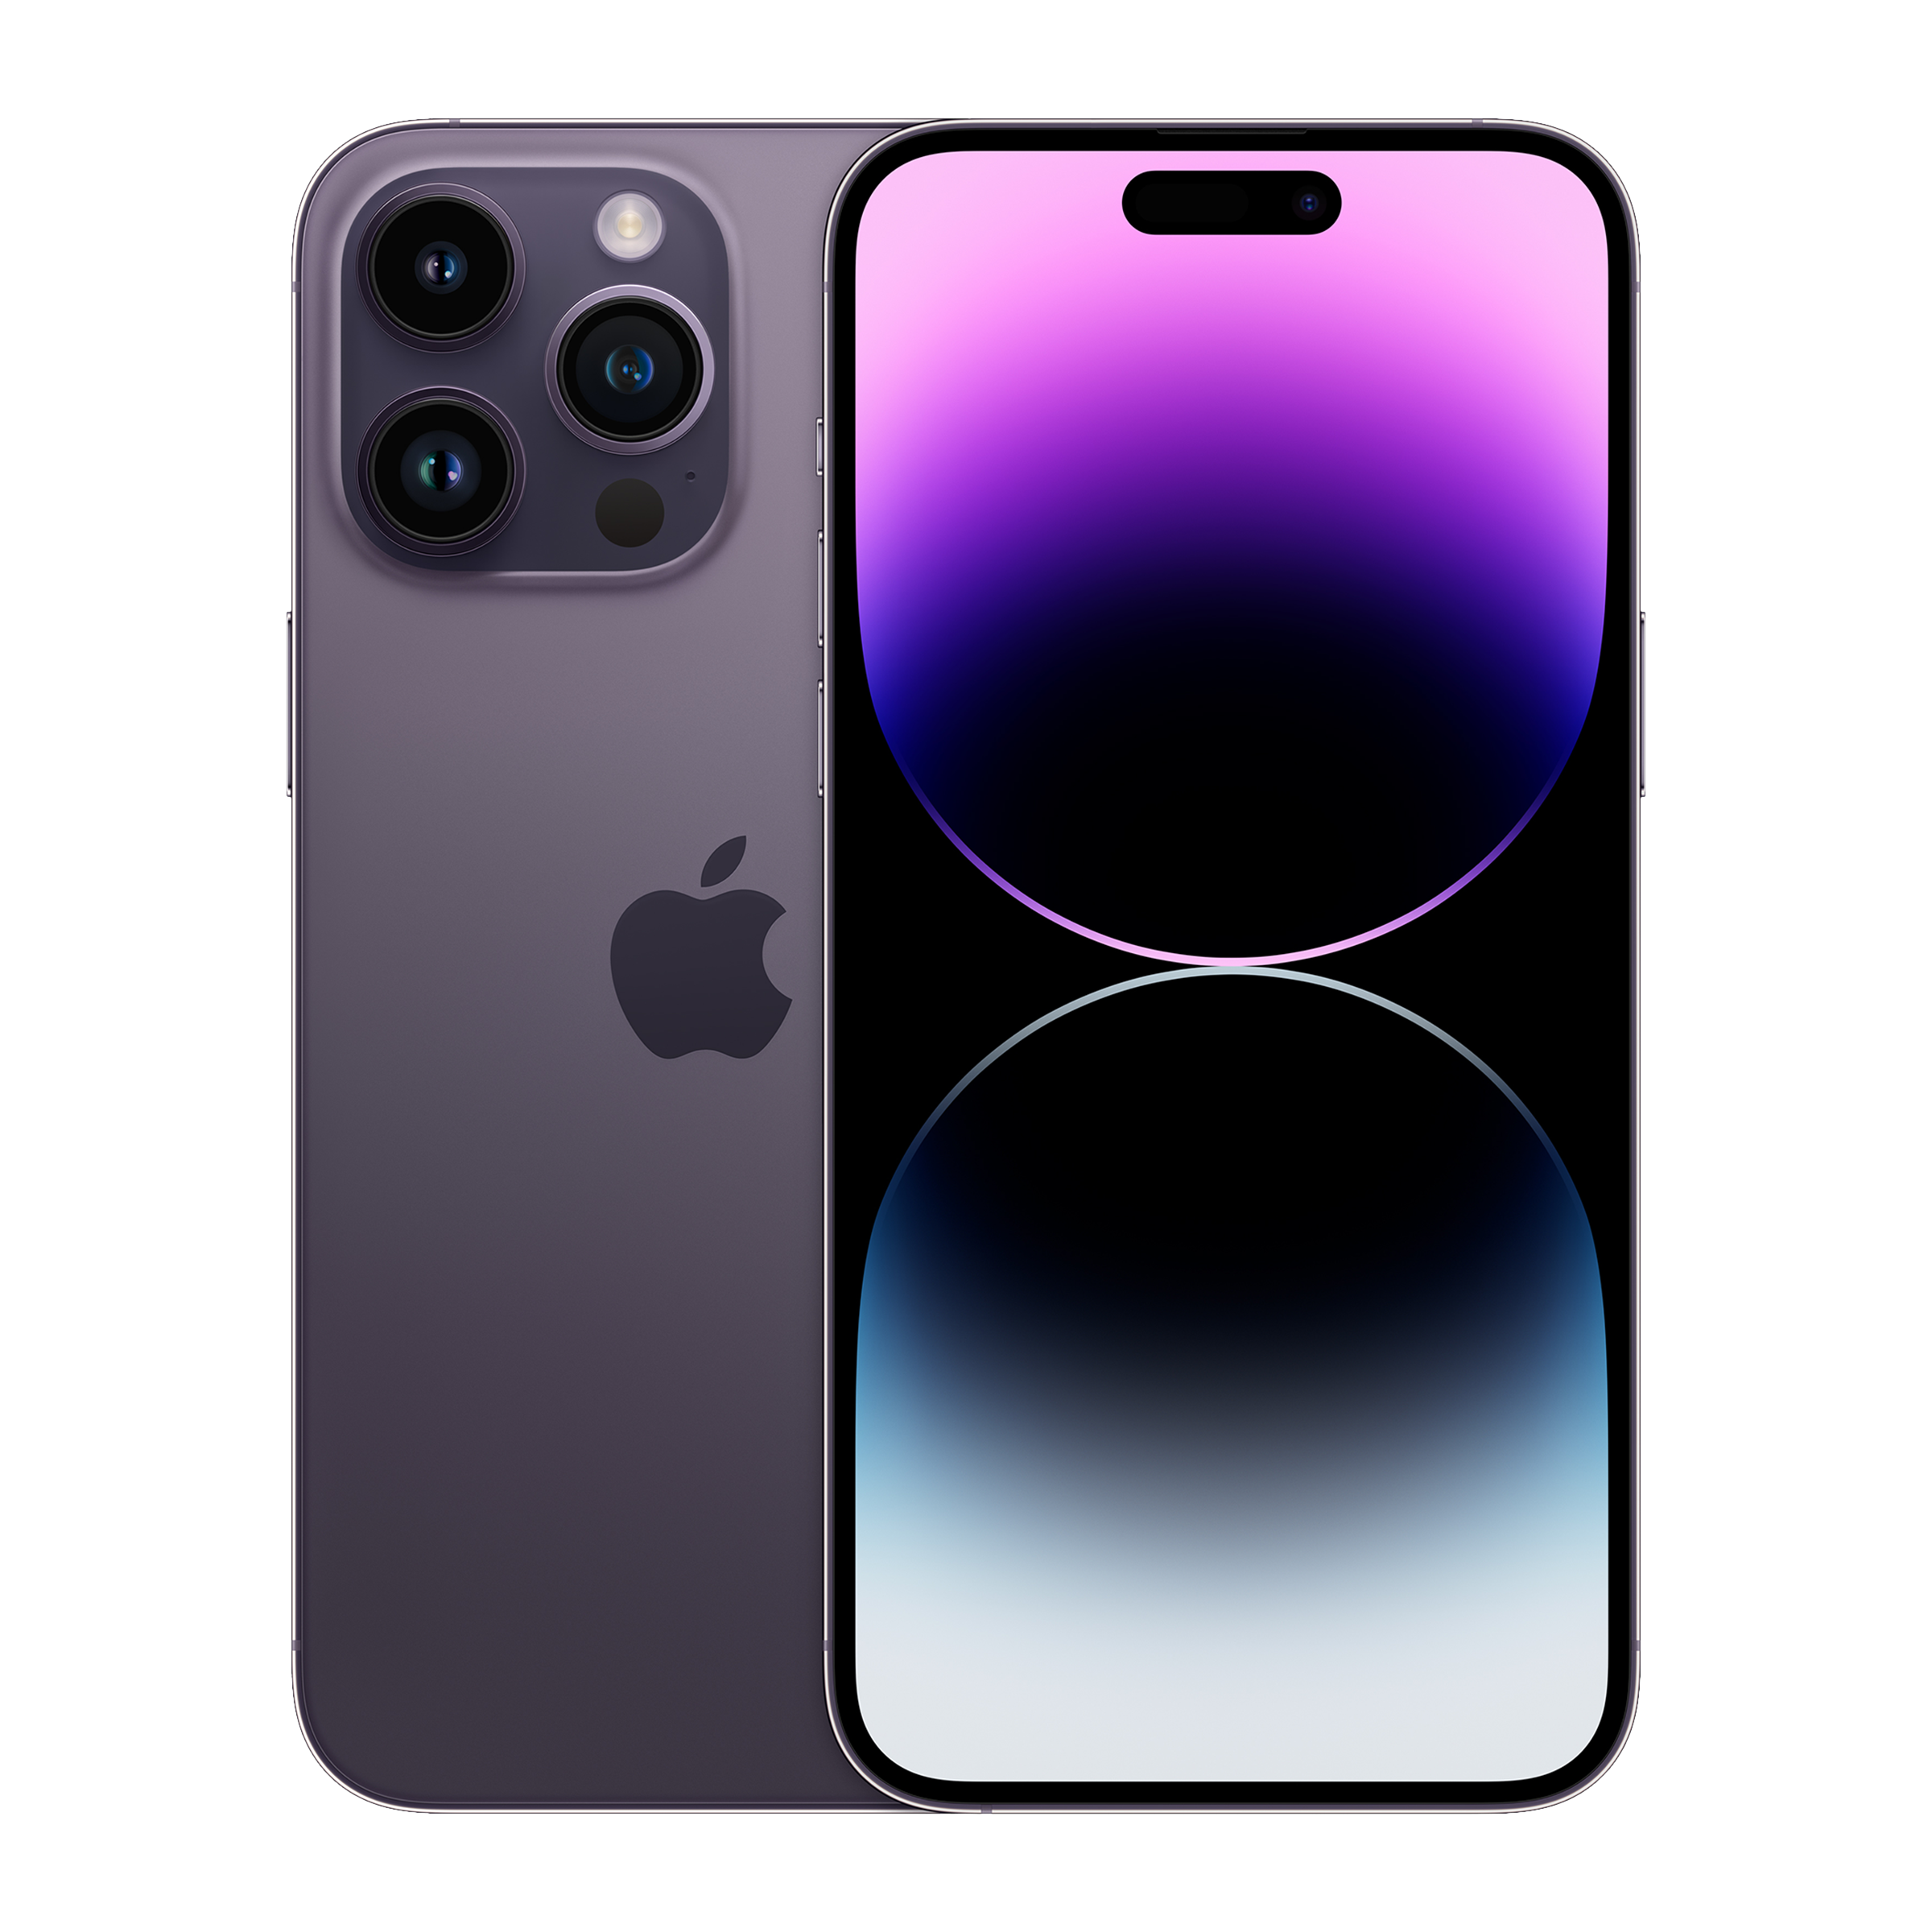 Apple iPhone 14 Pro Max (256GB, Deep Purple)_1